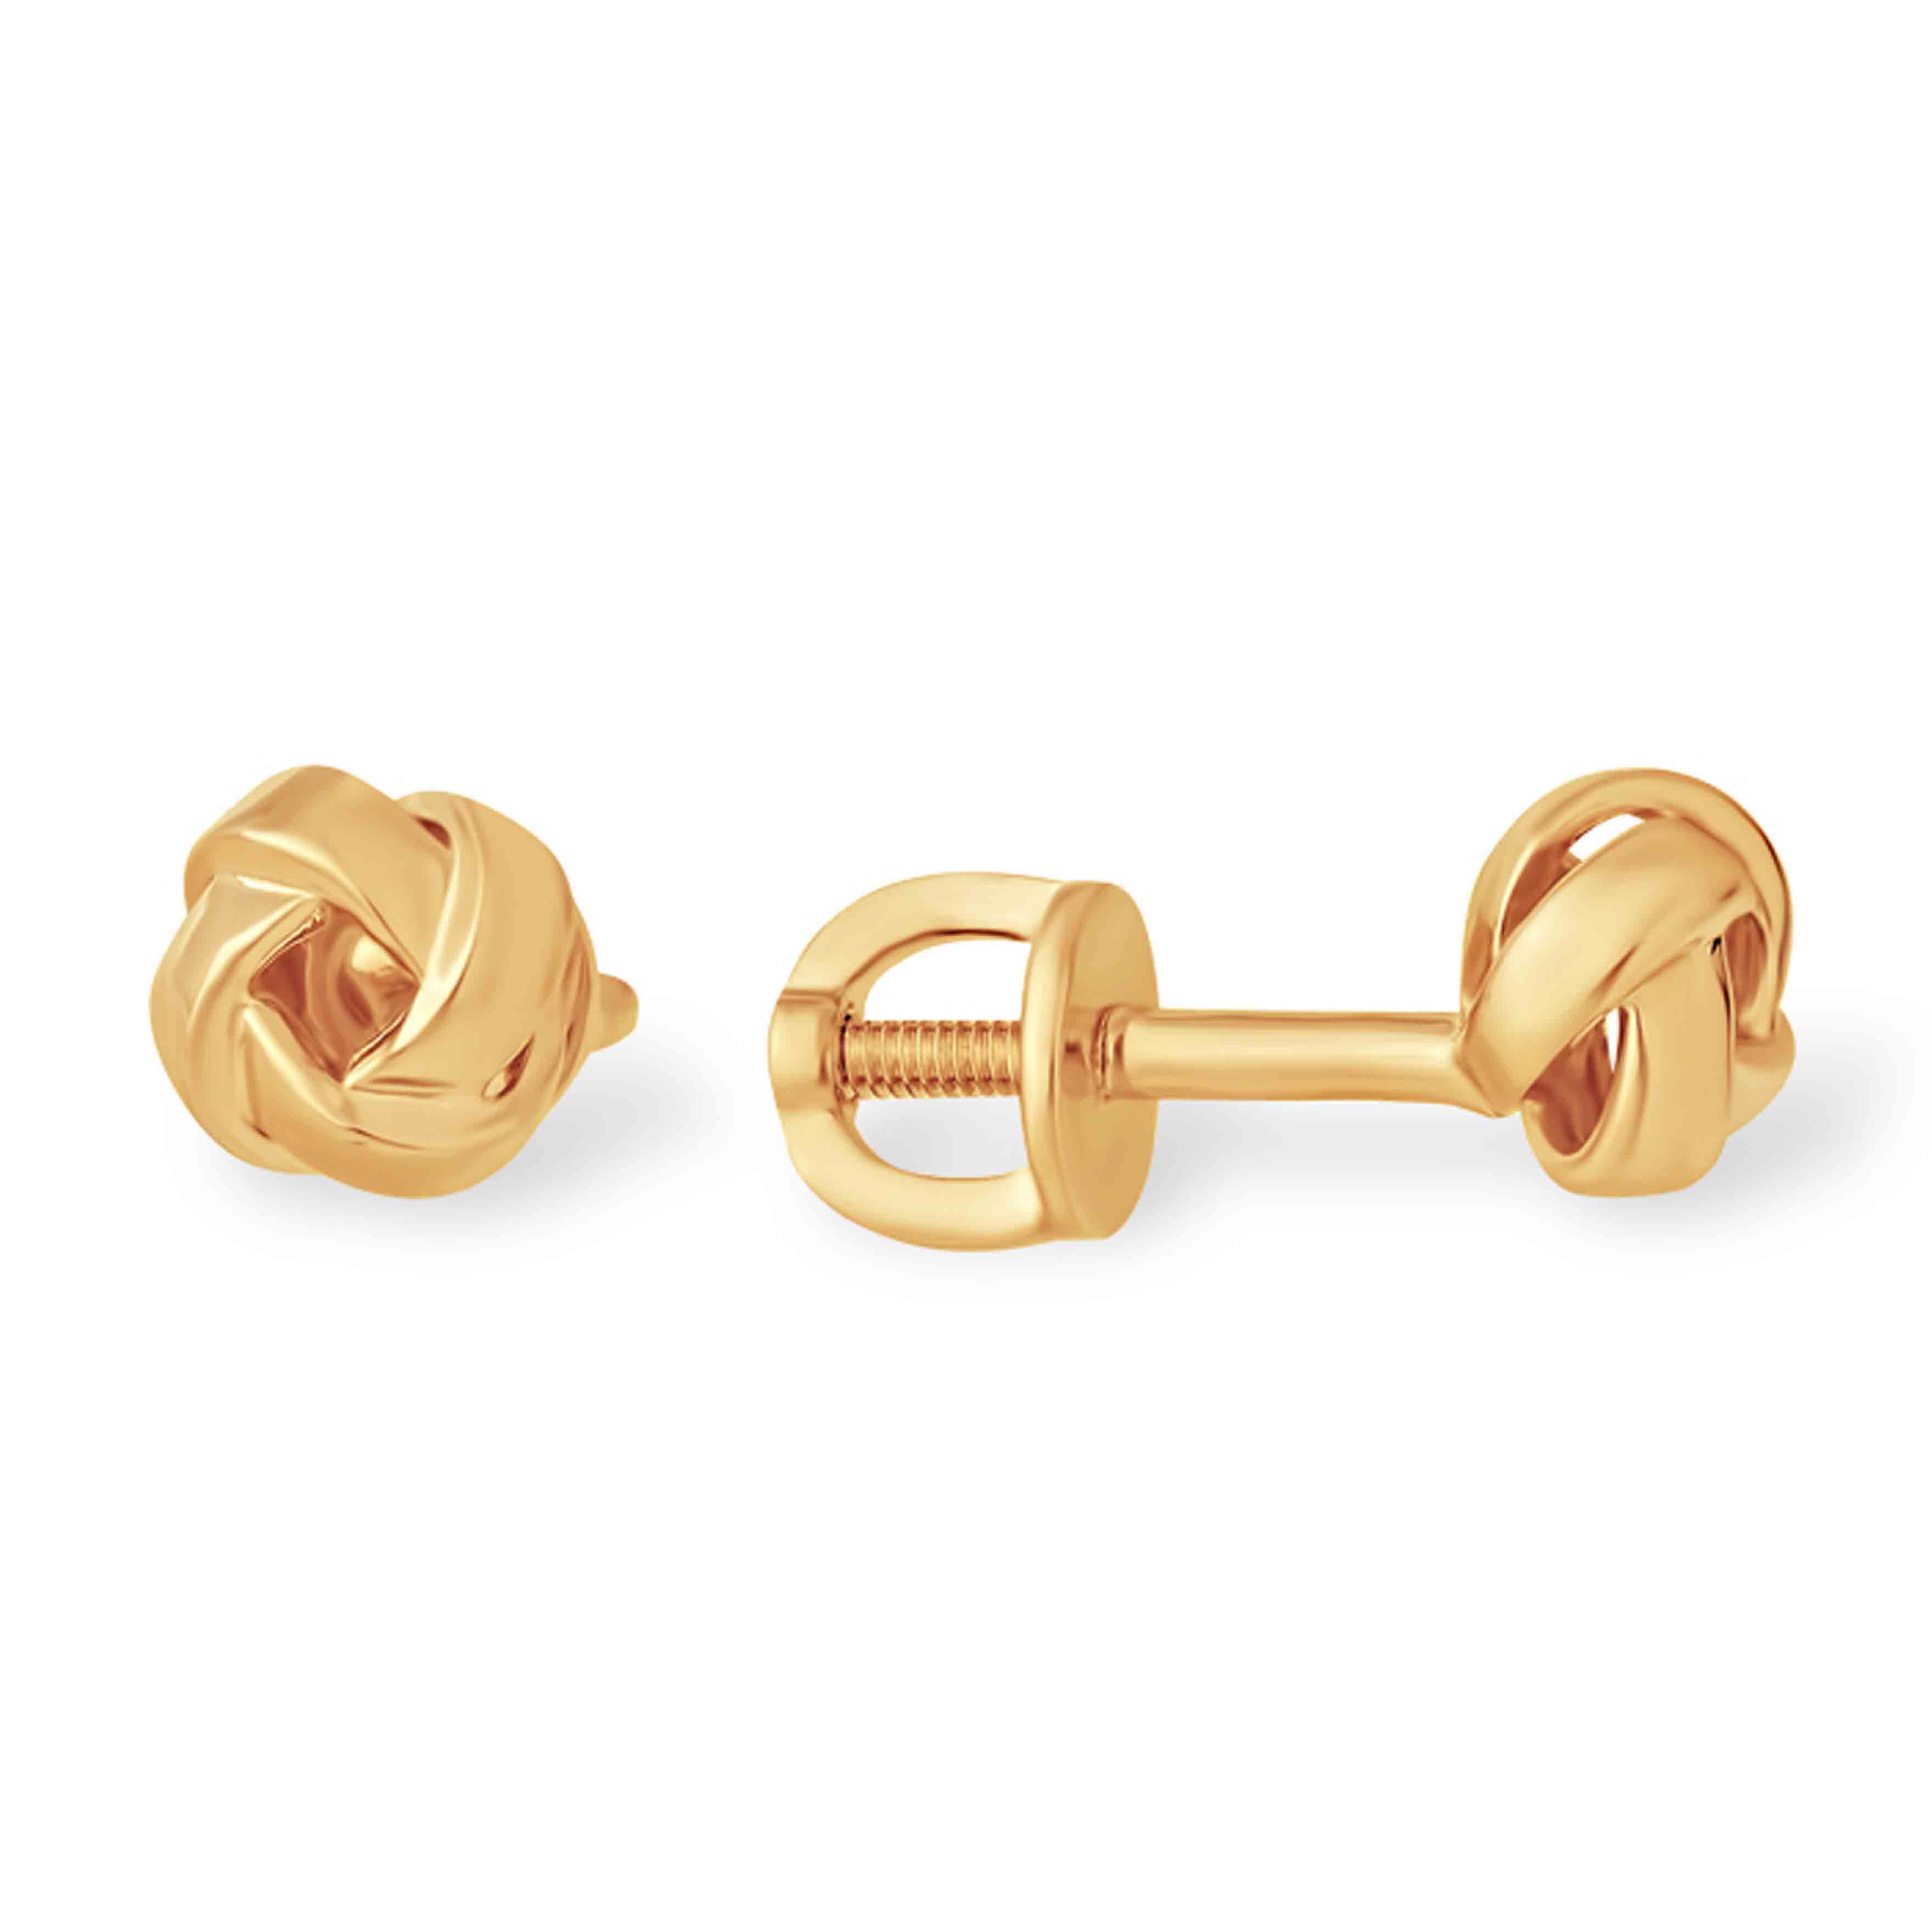 Buy 14K Rose Gold Screw Back Earring Backings Only Online at